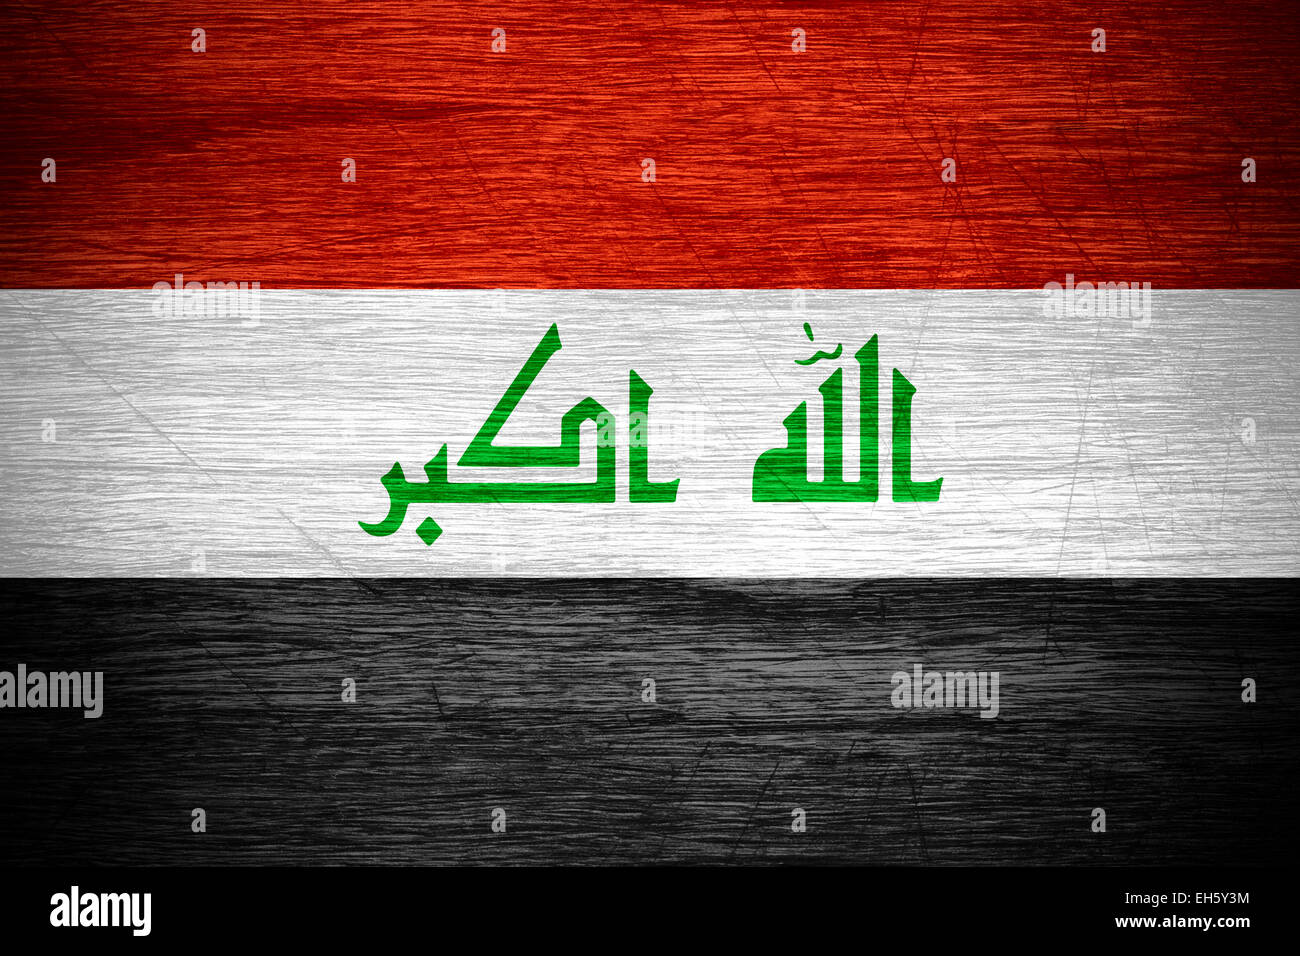 Irak flagge -Fotos und -Bildmaterial in hoher Auflösung – Alamy